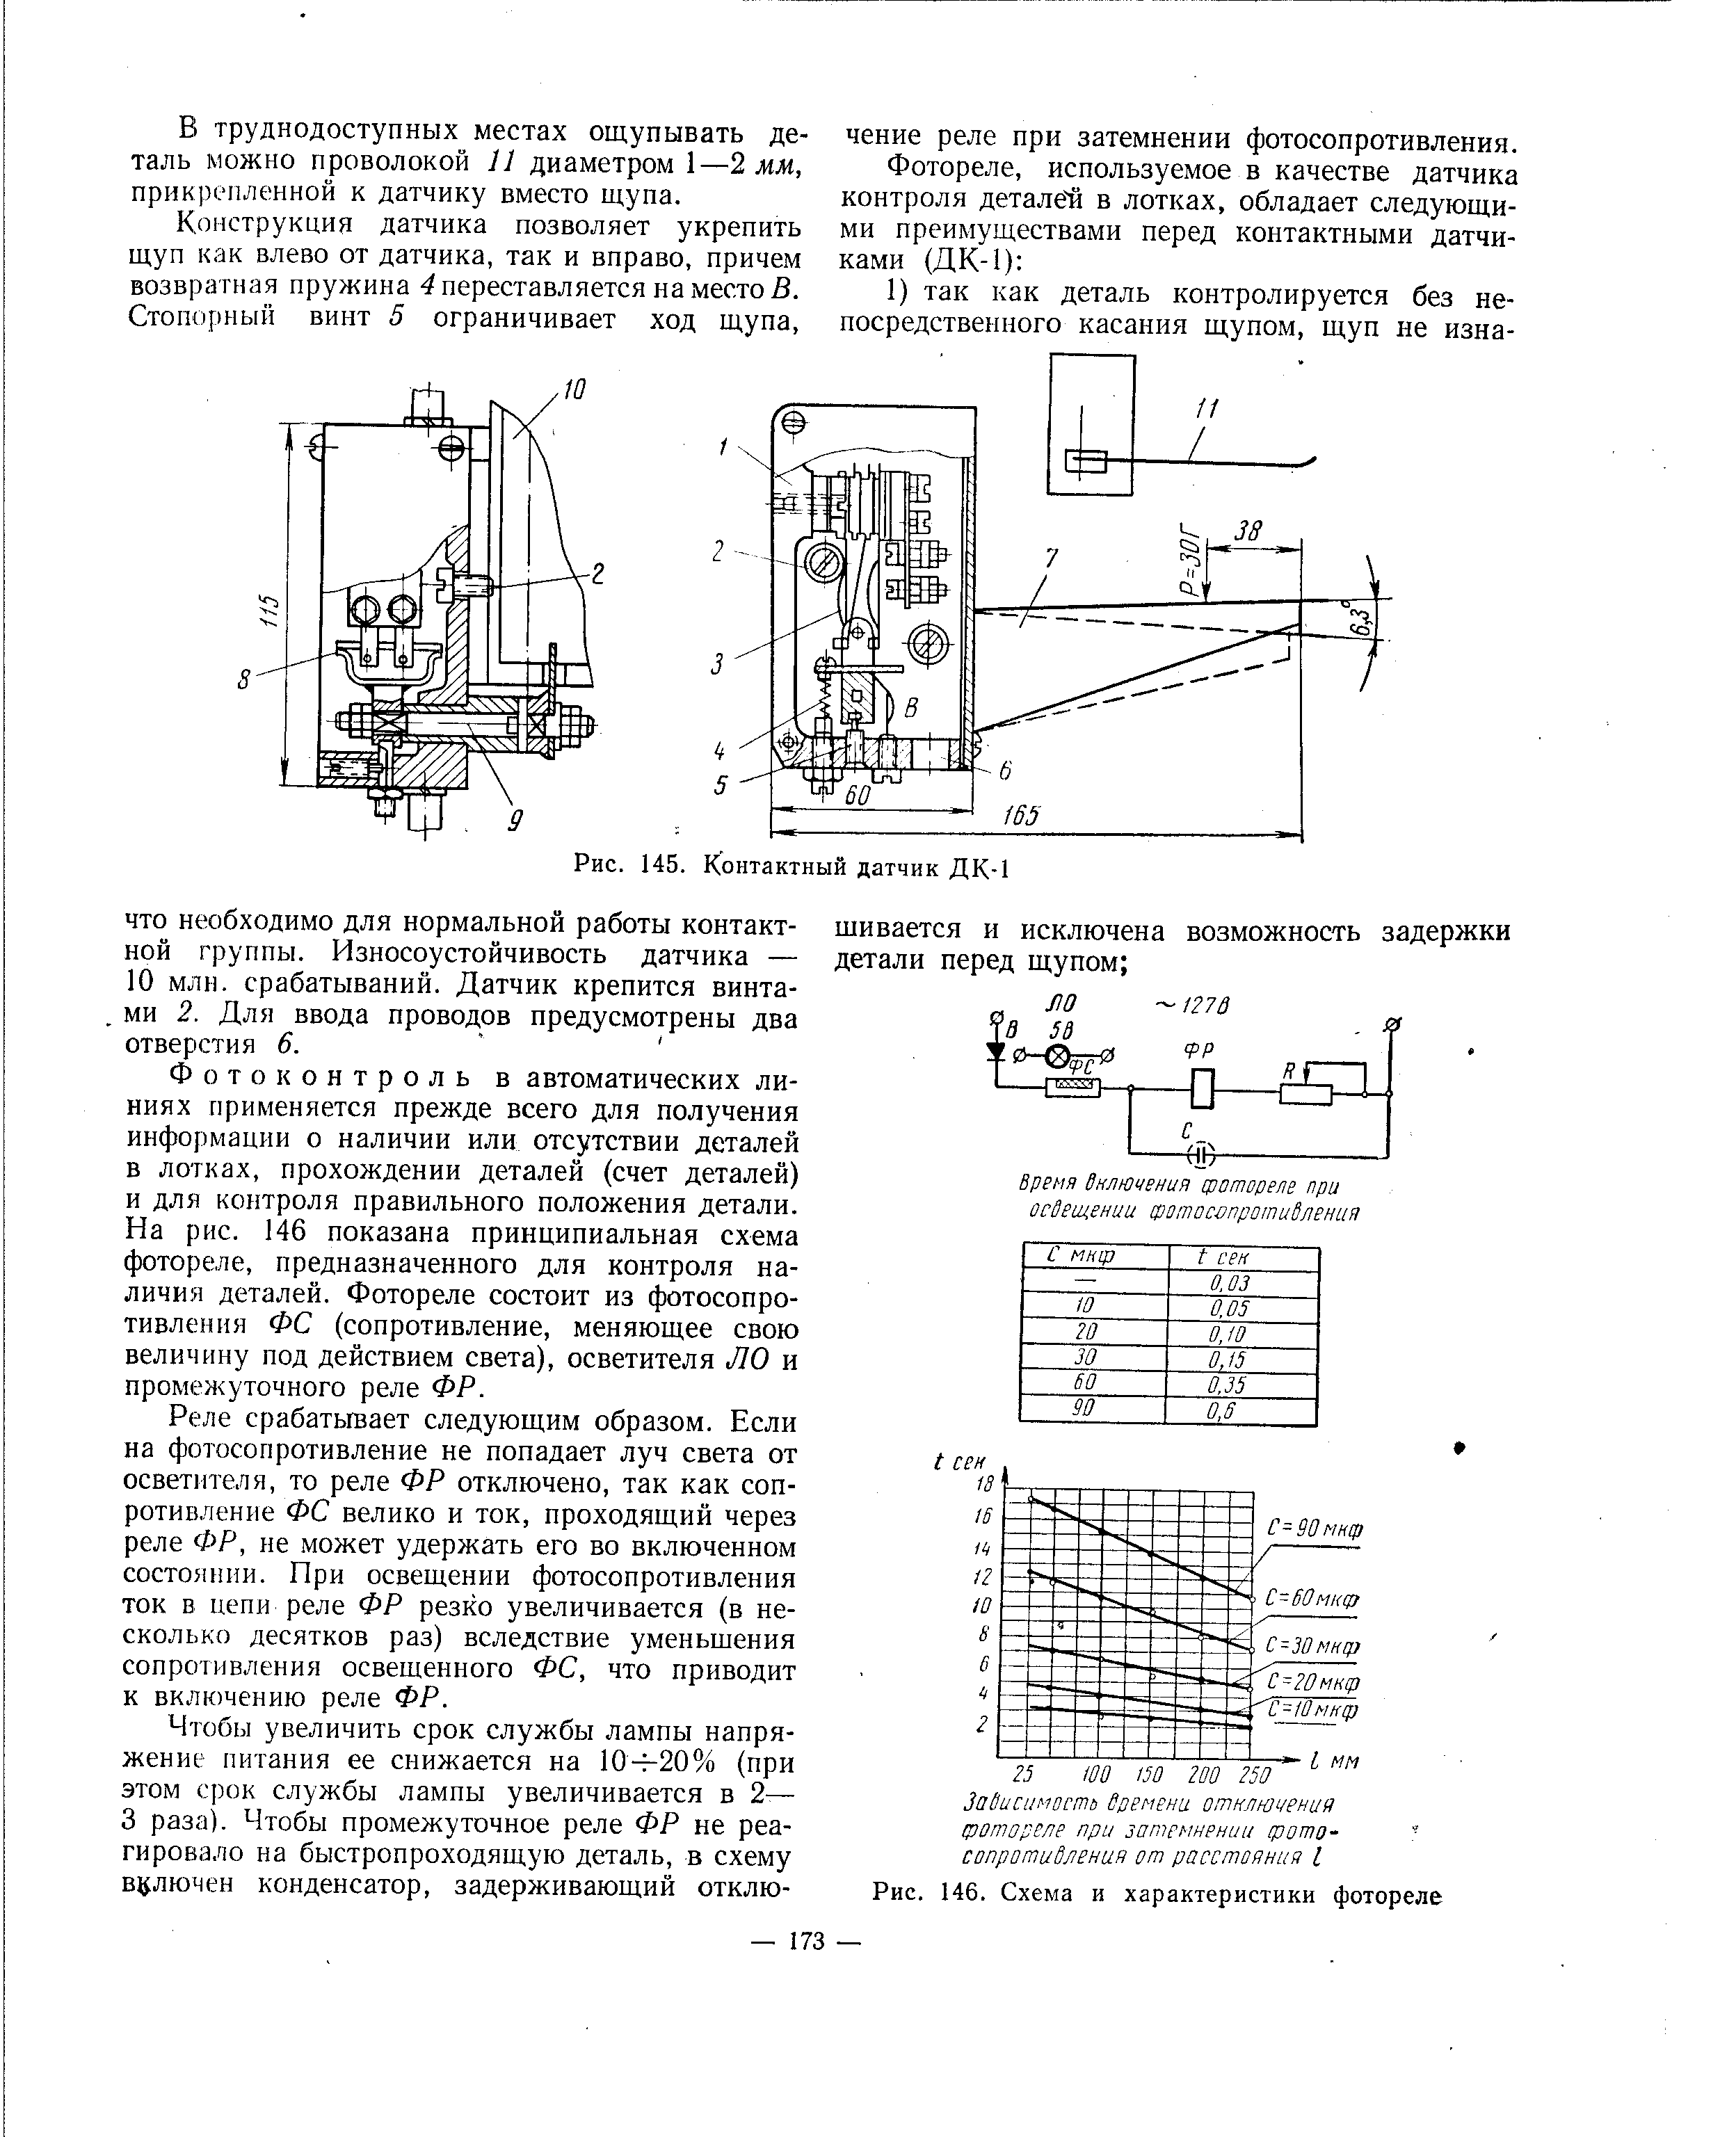 Рис. 146. Схема и характеристики фотореле
